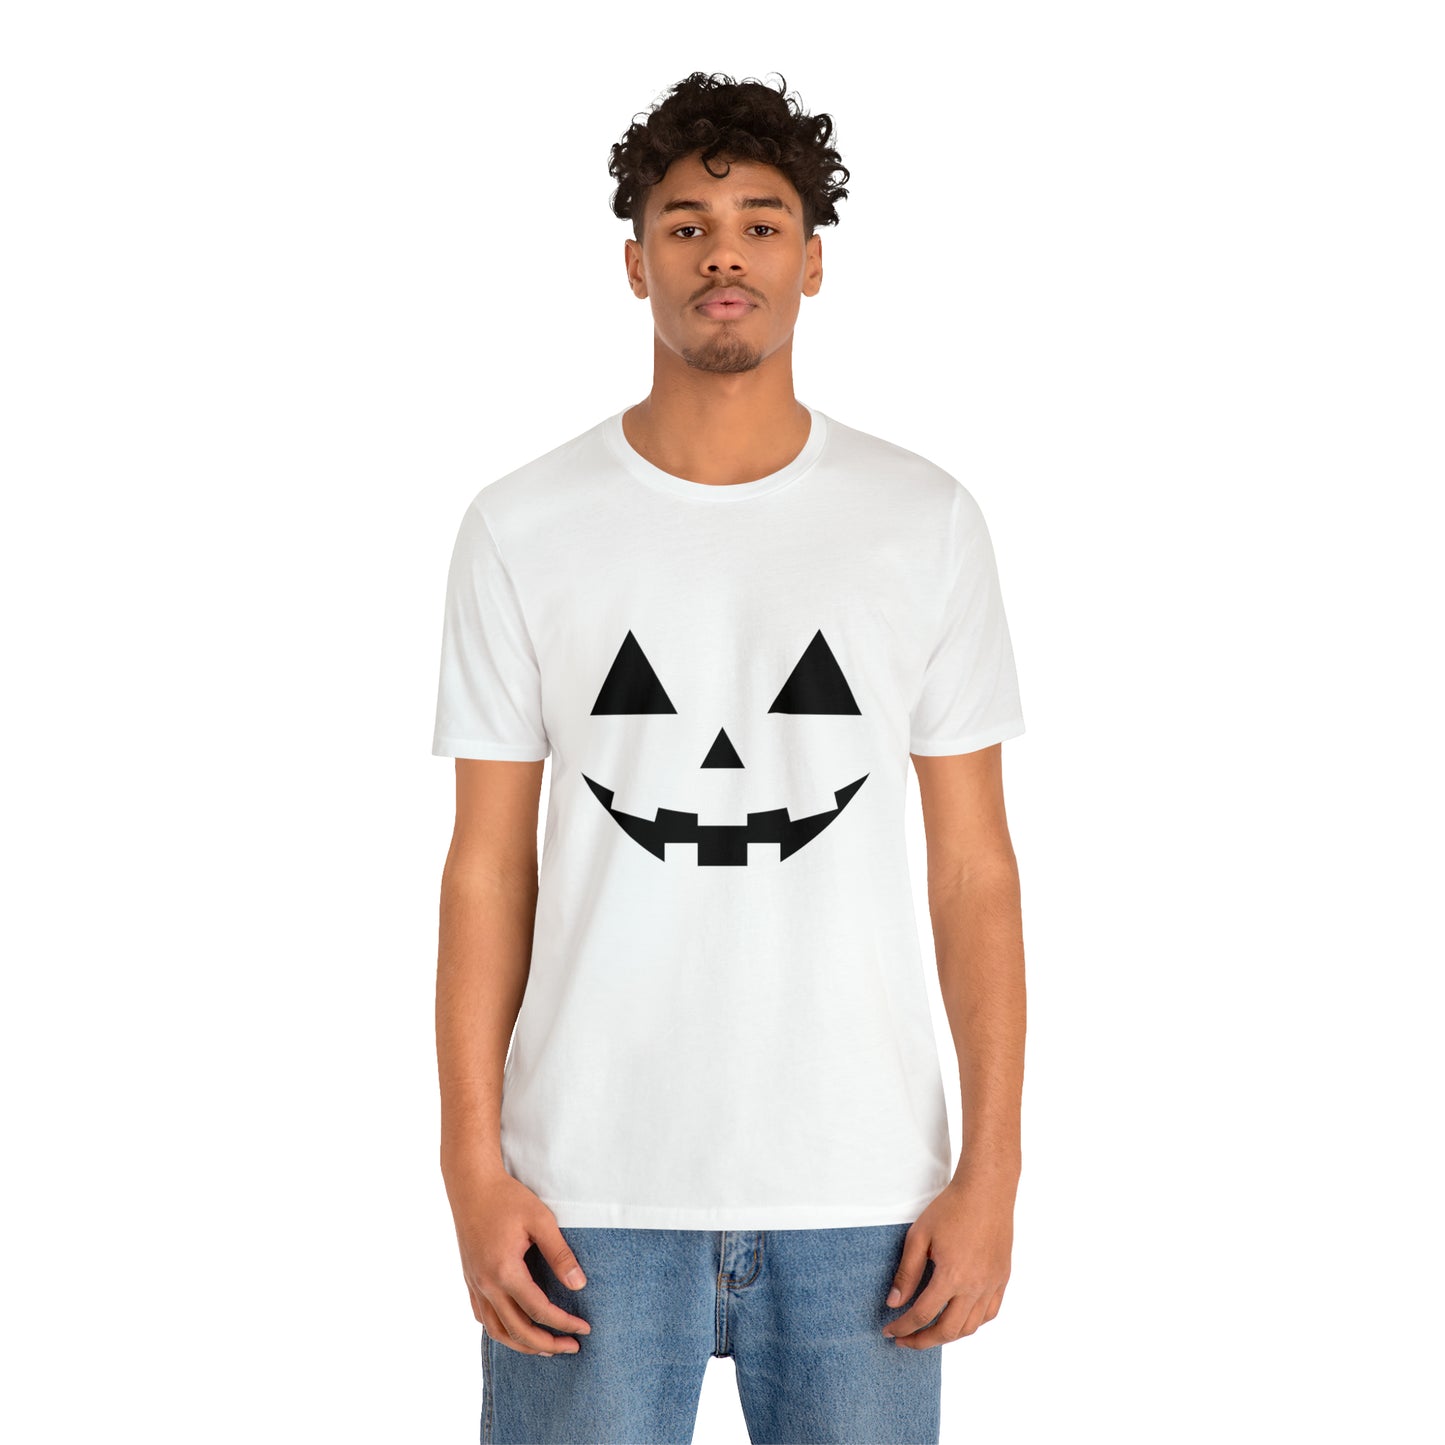 Halloween Pumpkin Faces Shirt Scary Faces, Pumpkin Silhouette, Vintage Shirt Halloween Shirt Pumpkin Face Halloween Costume Comfort Colors